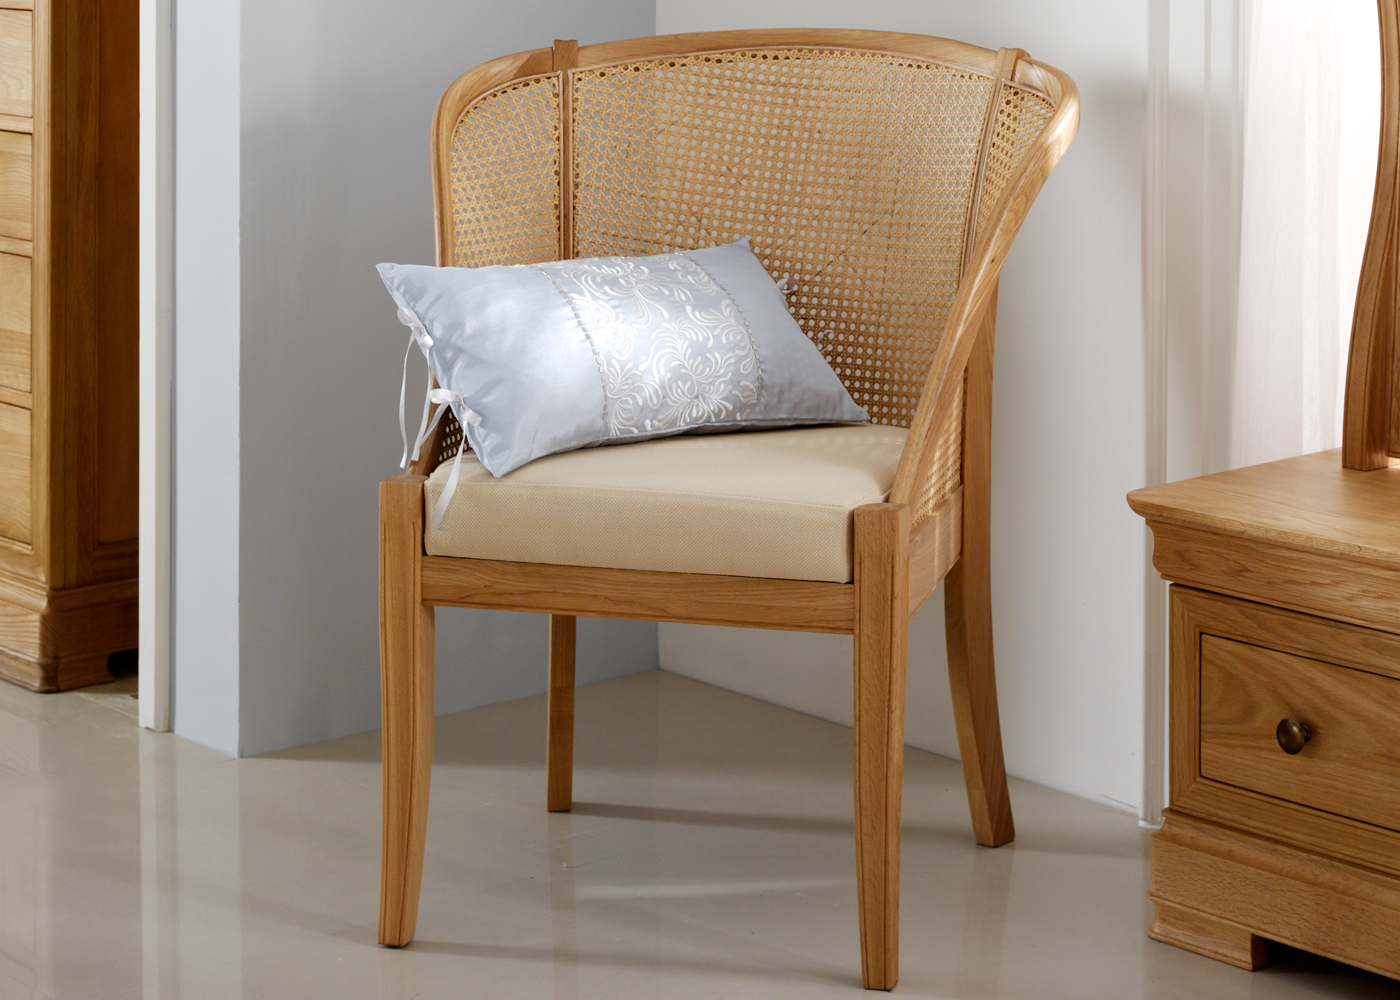 Bedroom Chairs - Midfurn Furniture Superstore